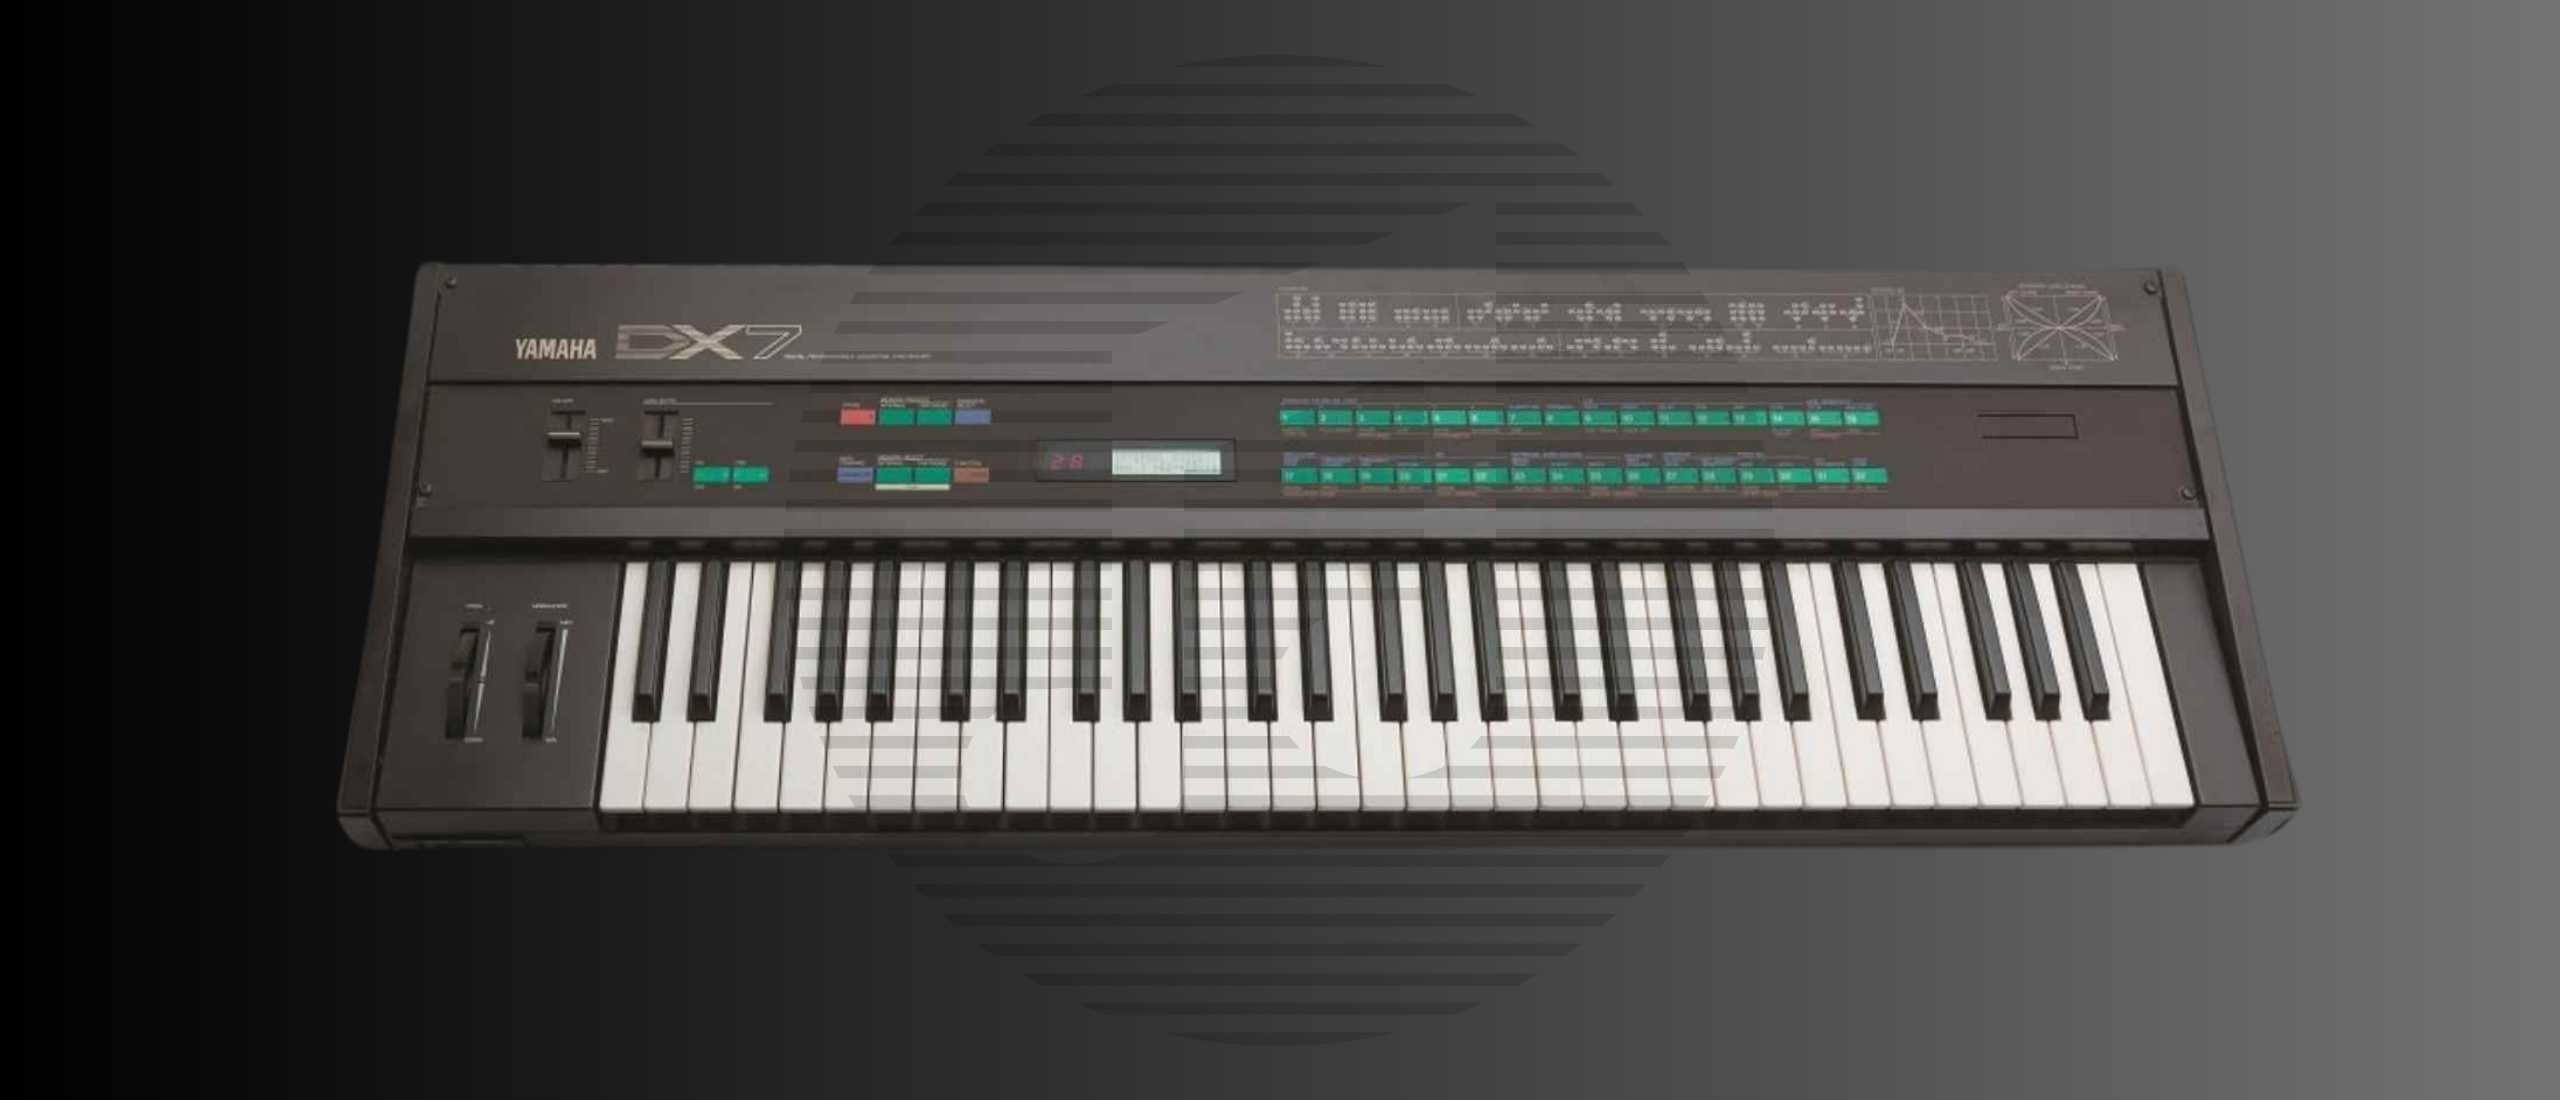 Yamaha DX7 Synthesizer: De Revolutie van de Digitale Synthese